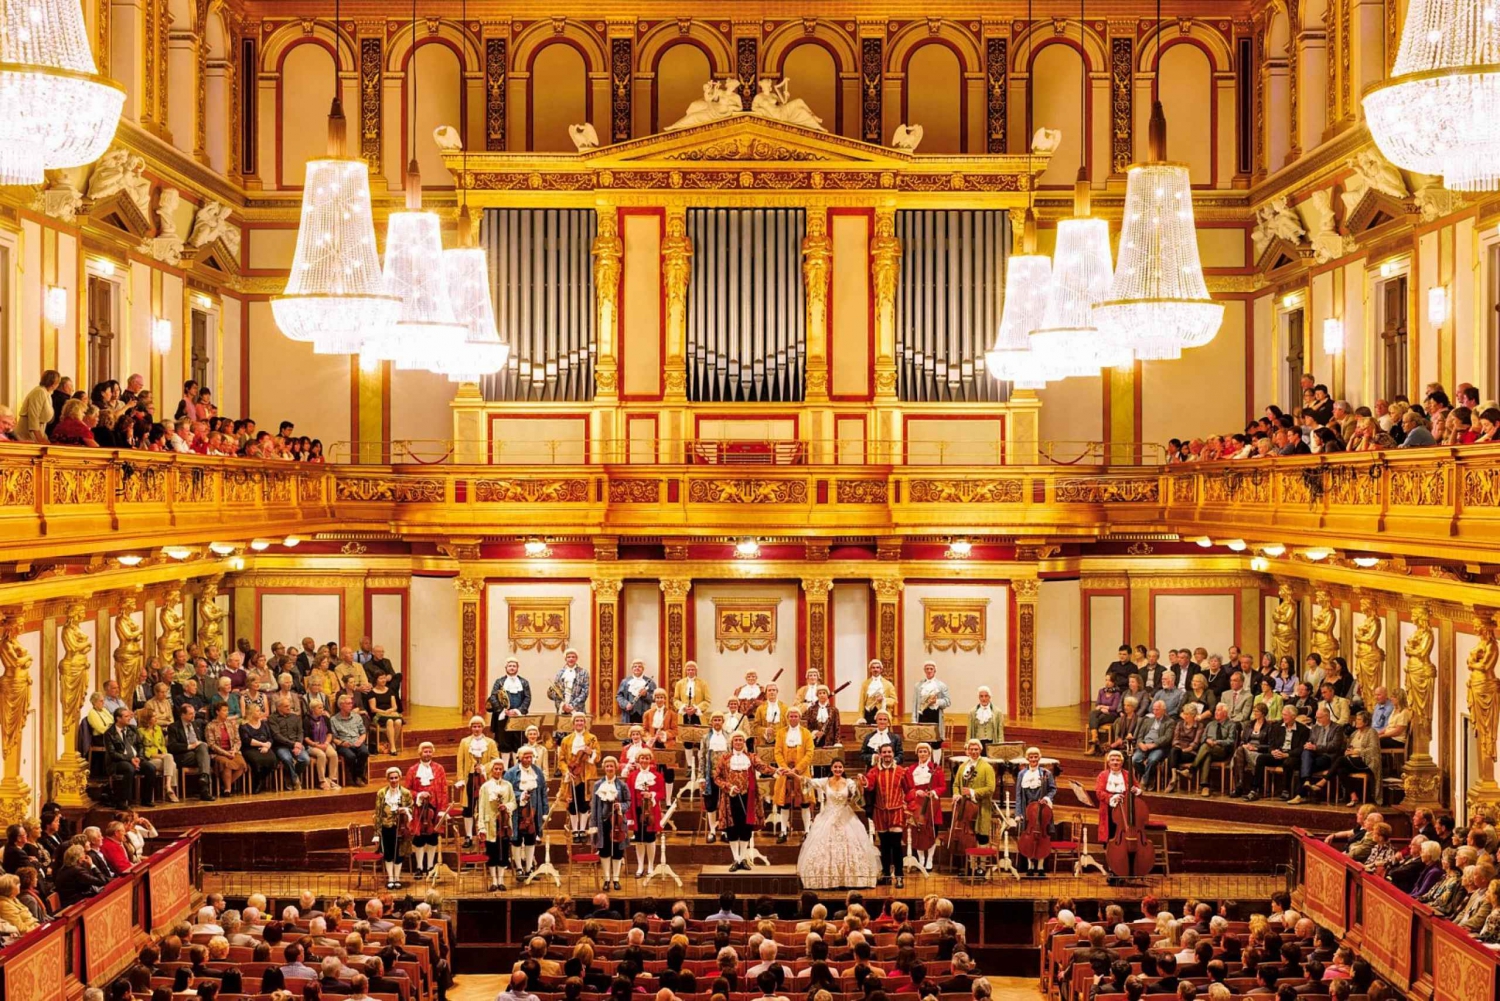 Musikverein---The-Golden-Hall-of-Symphonies